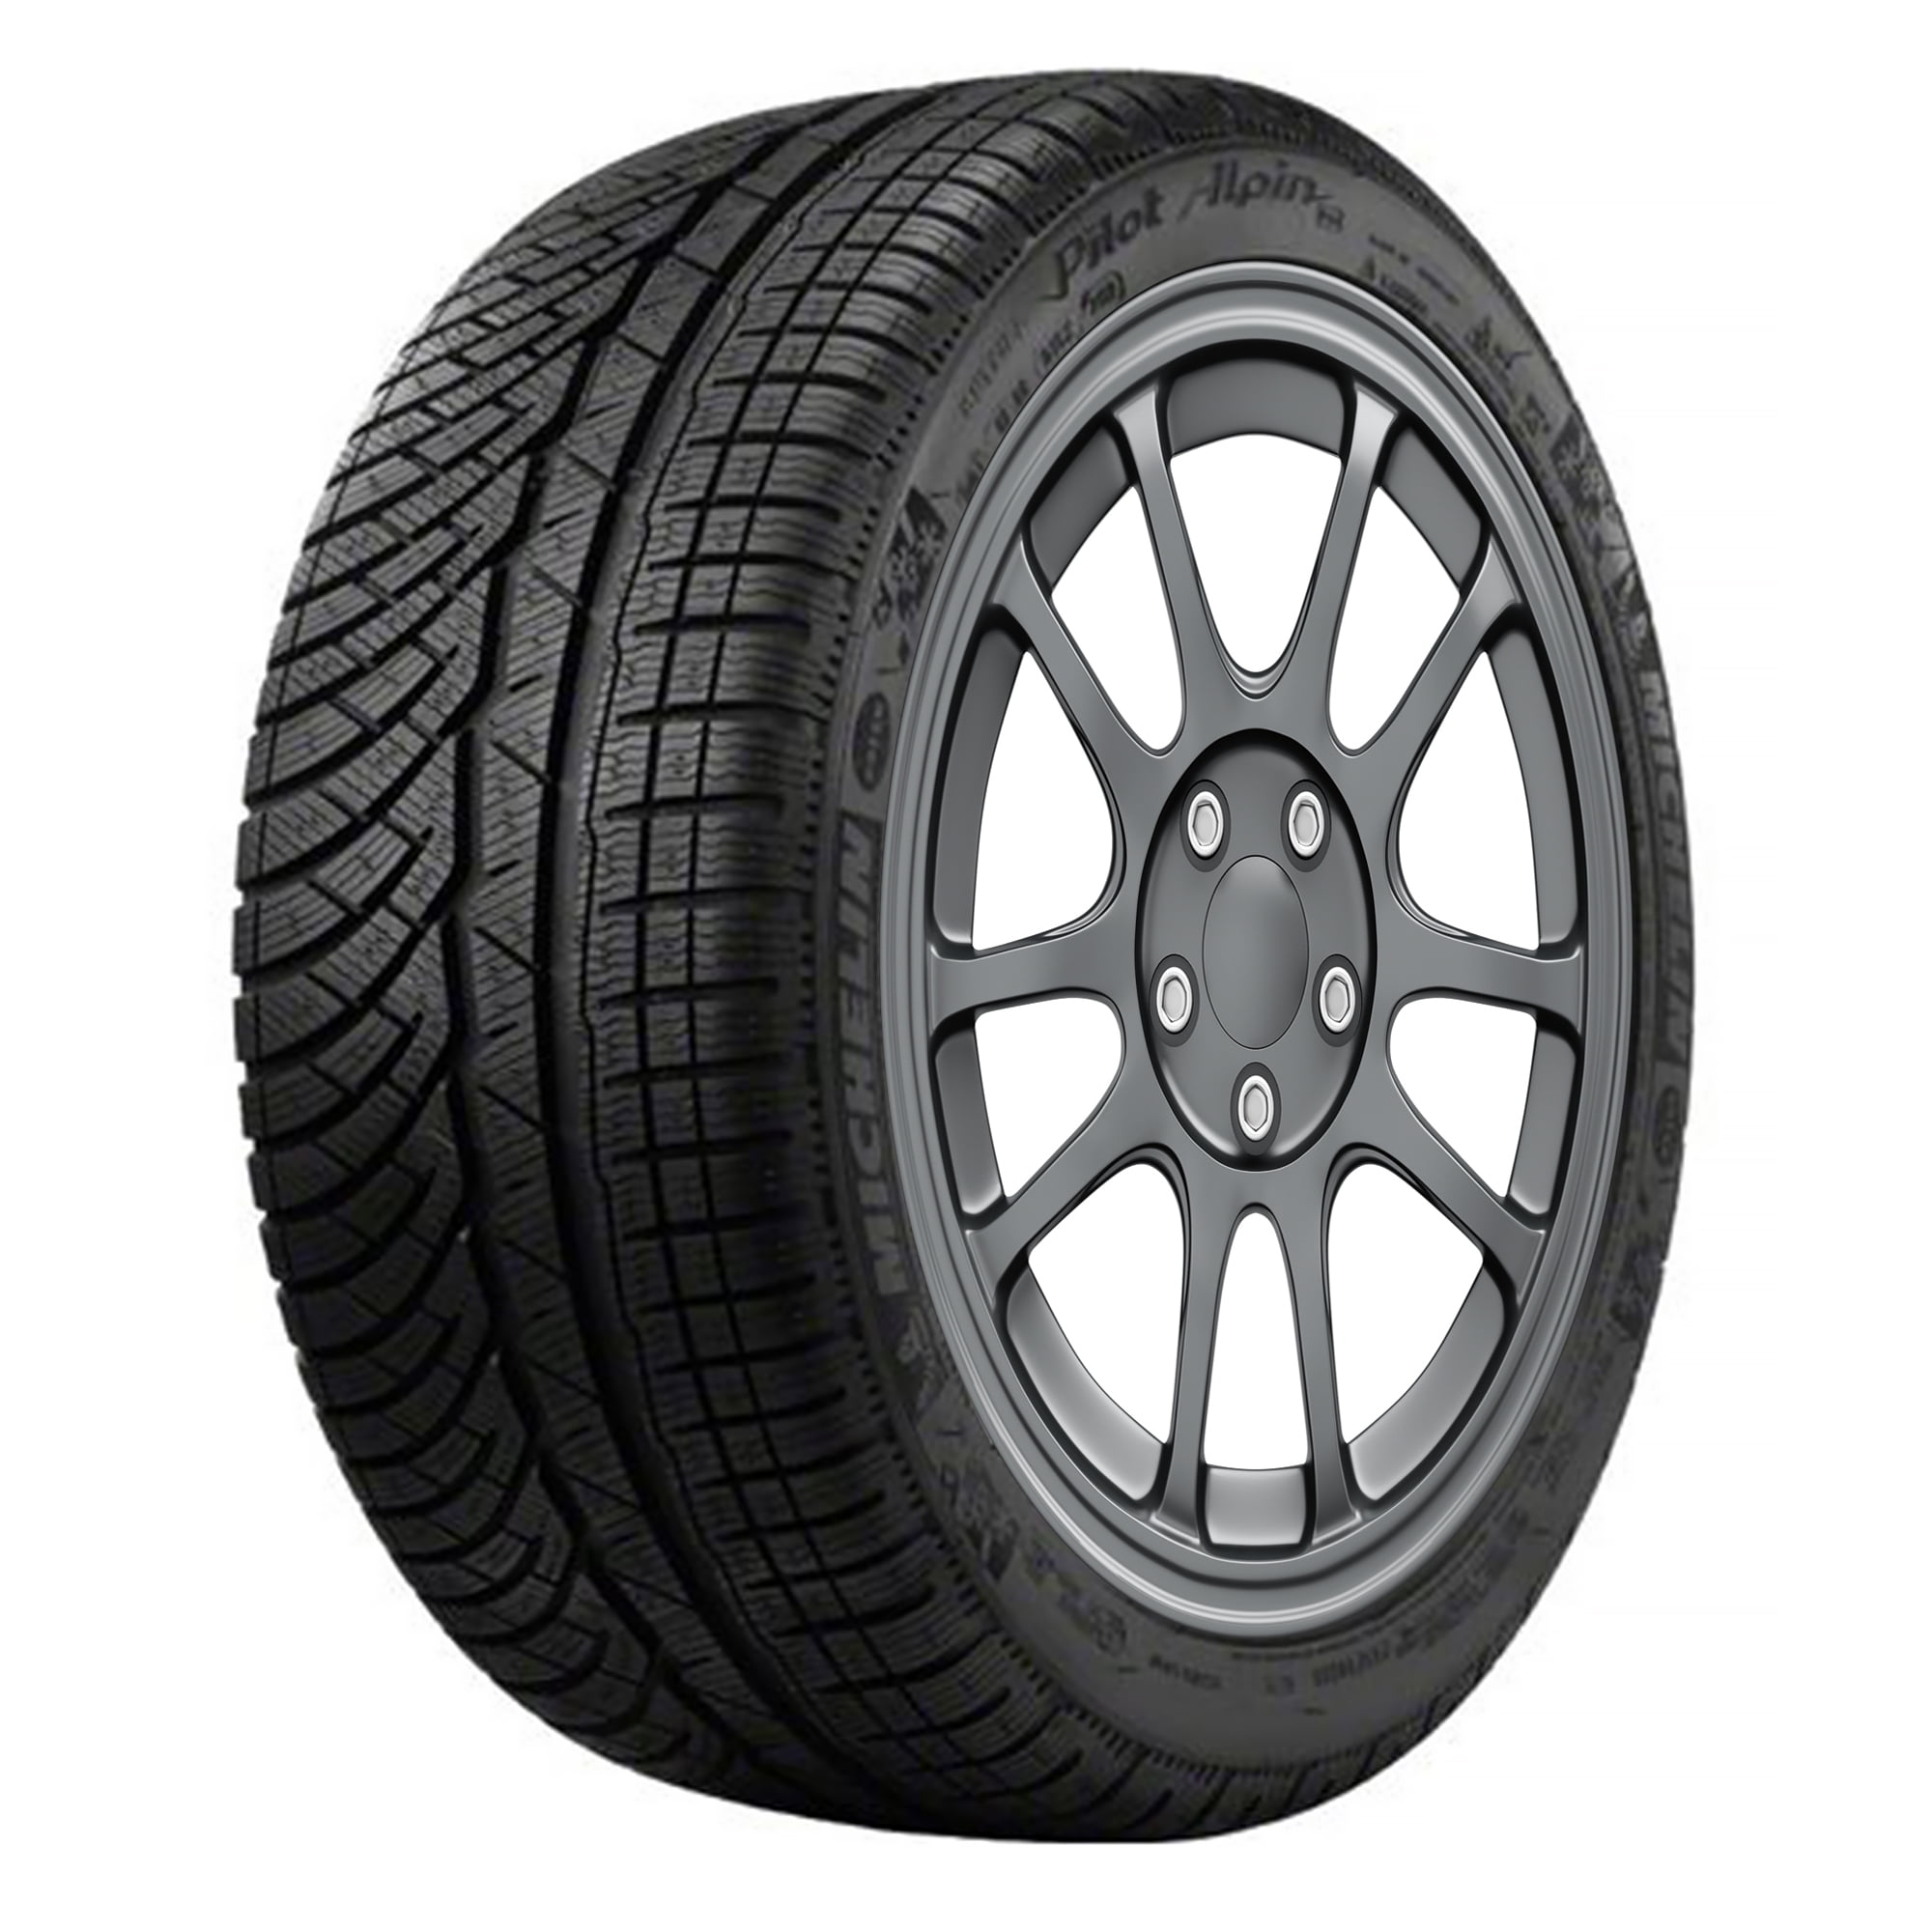 Michelin Pilot Alpin PA4 High Performance Tire 285/30R19/XL 98W